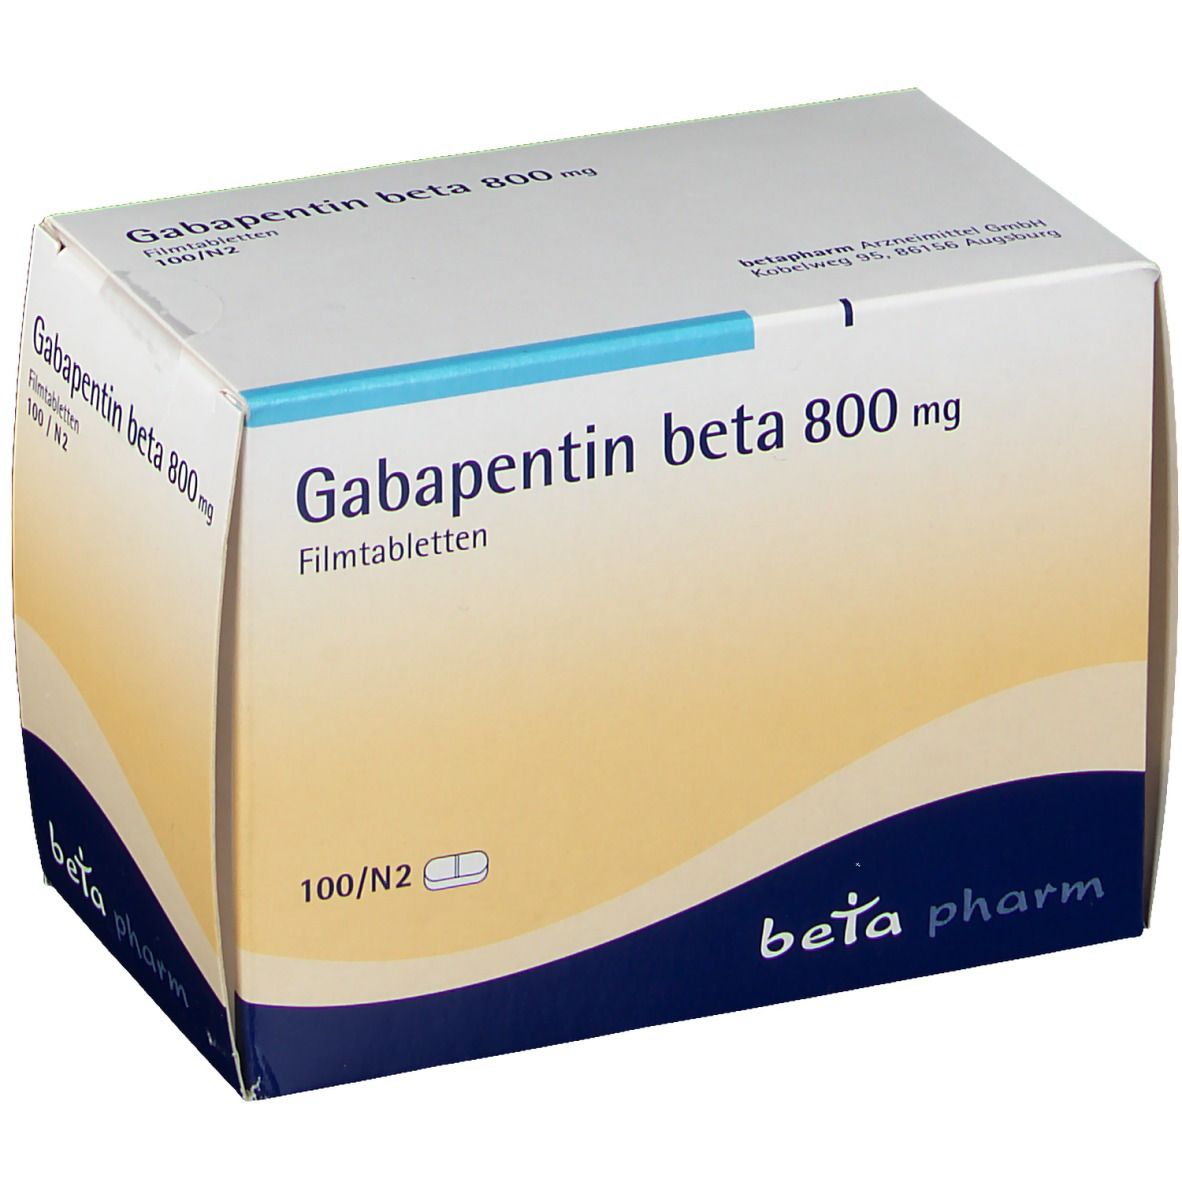 Gabapentin beta 800 mg